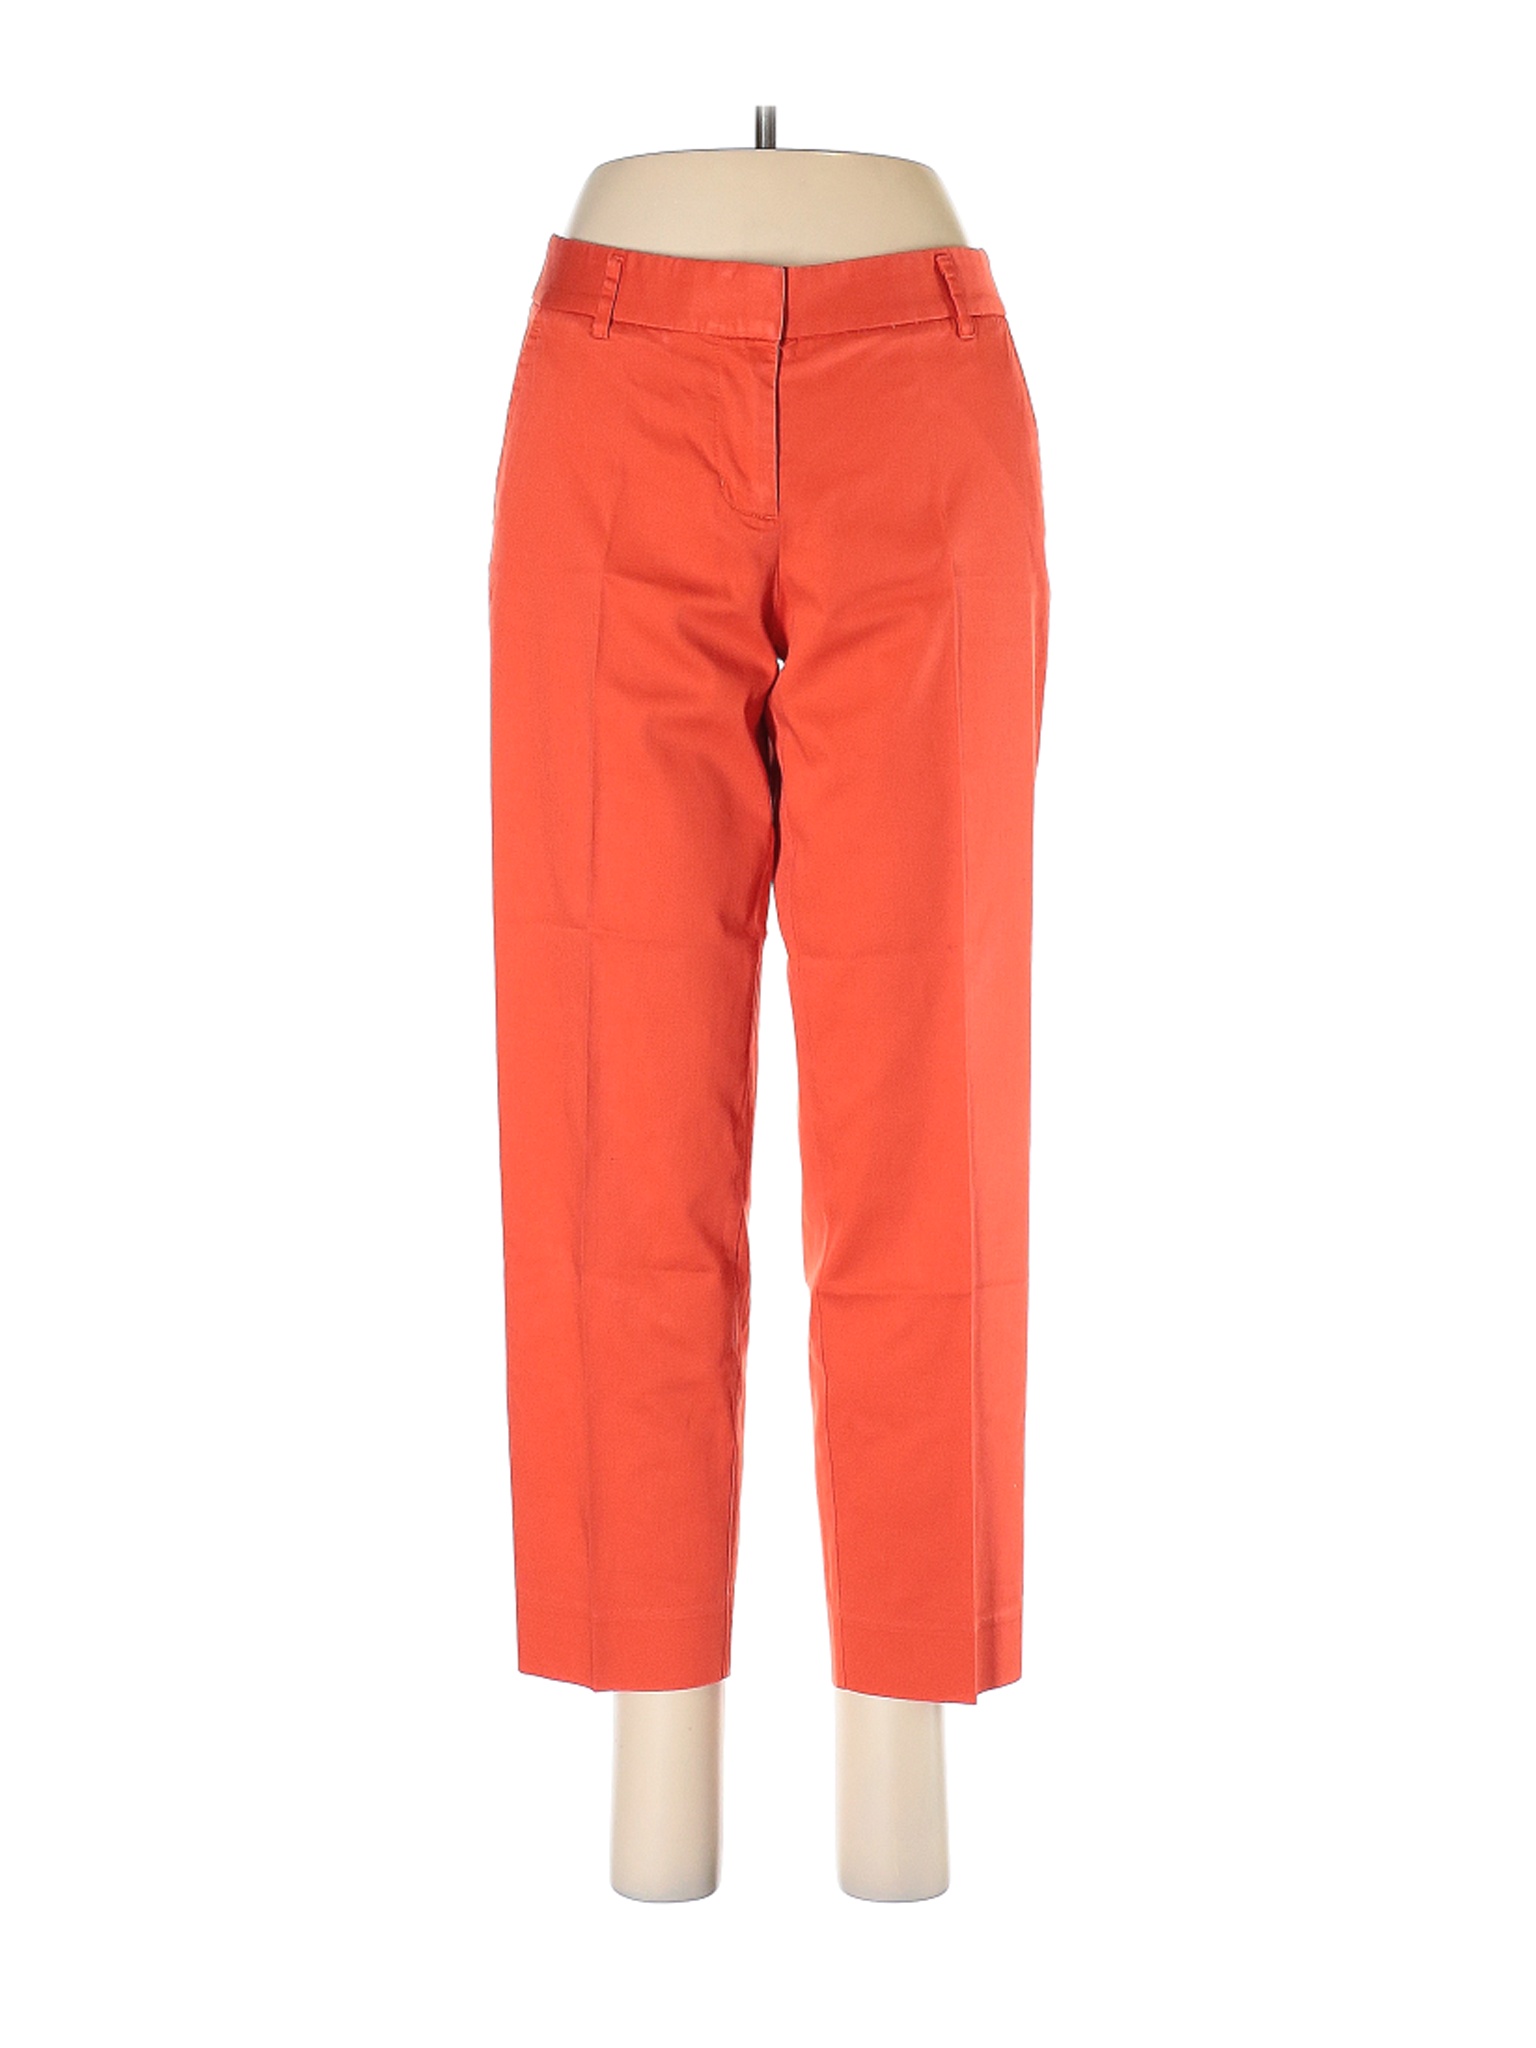 J.Crew Factory Store Women Orange Dress Pants 6 | eBay